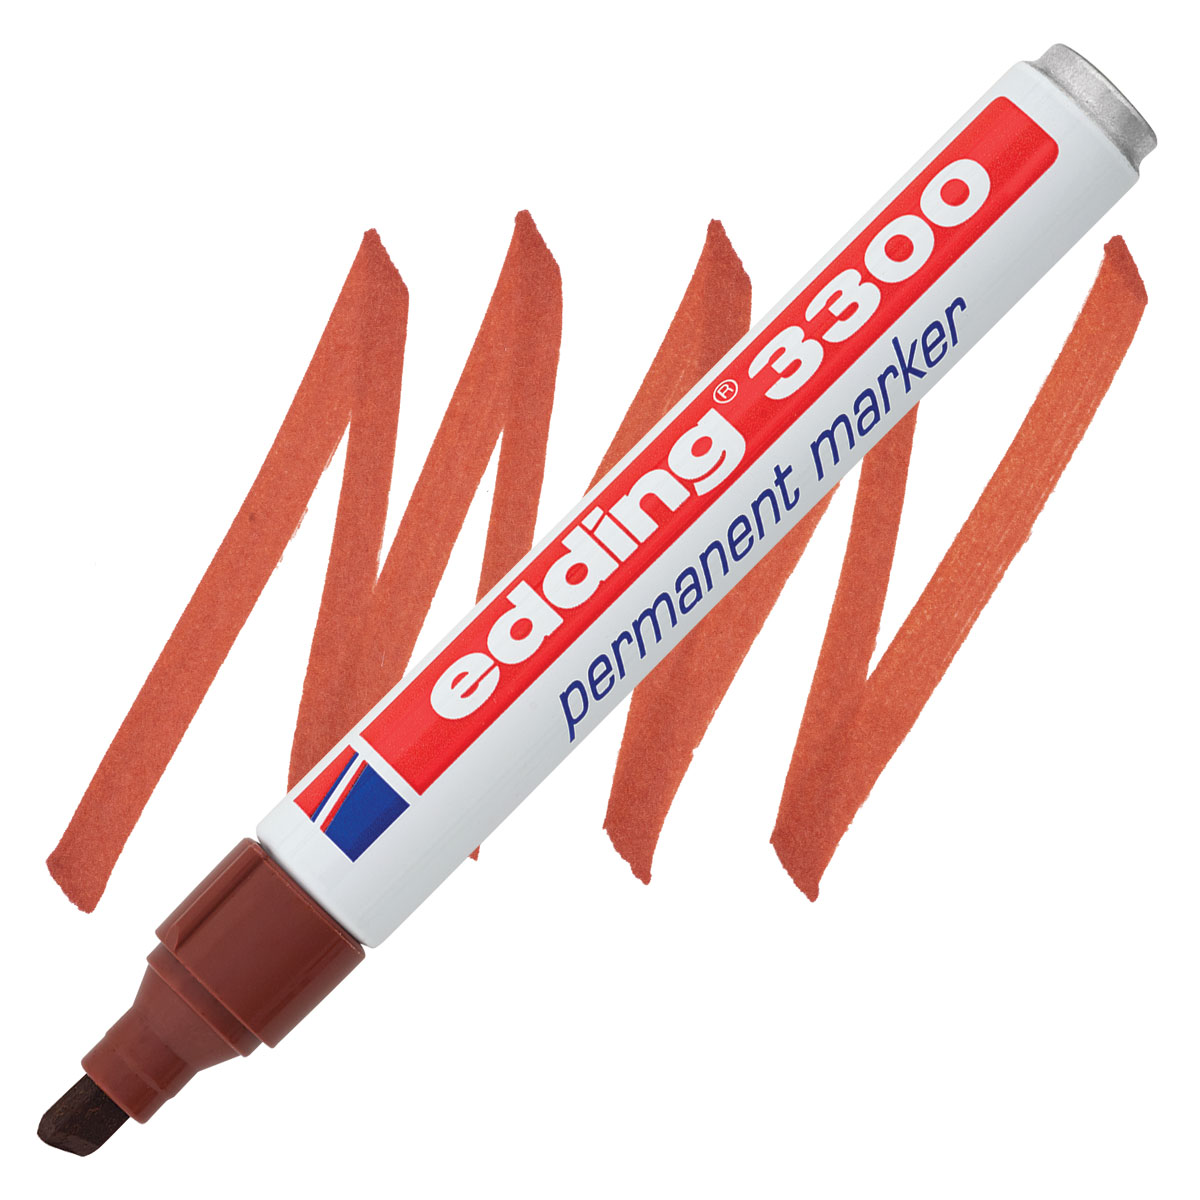 Edding Permanent Marker - Brown, 3300, Chisel Nib, 1-5 mm